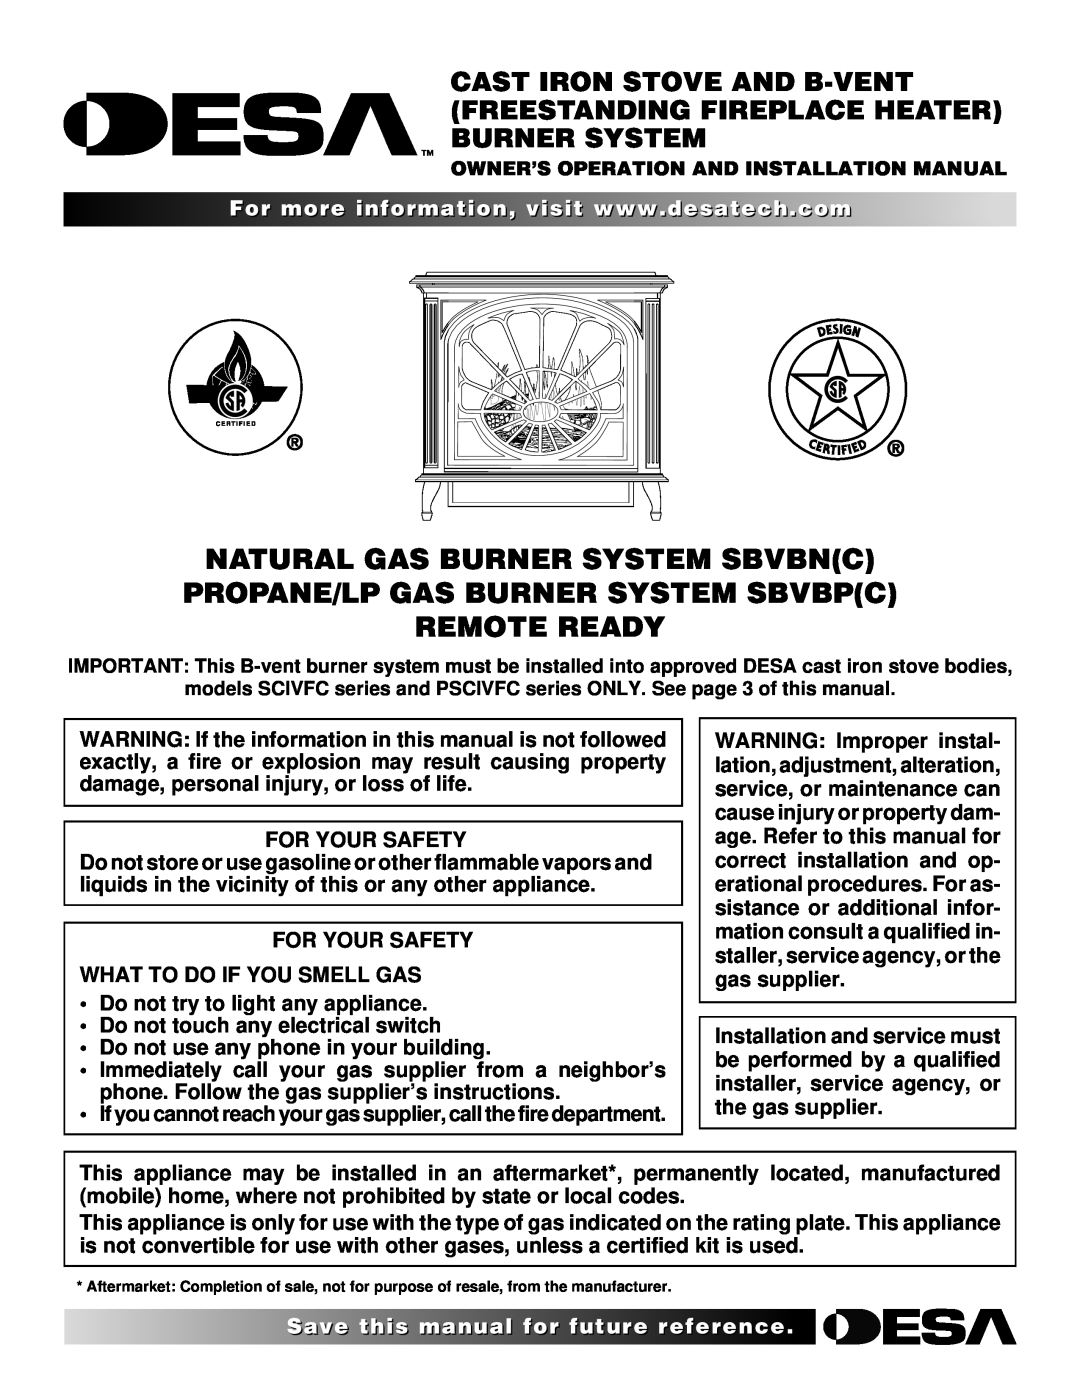 Desa SBVBP(C) installation manual Natural Gas Burner System Sbvbnc Propane/Lp Gas Burner System Sbvbpc, Remote Ready 